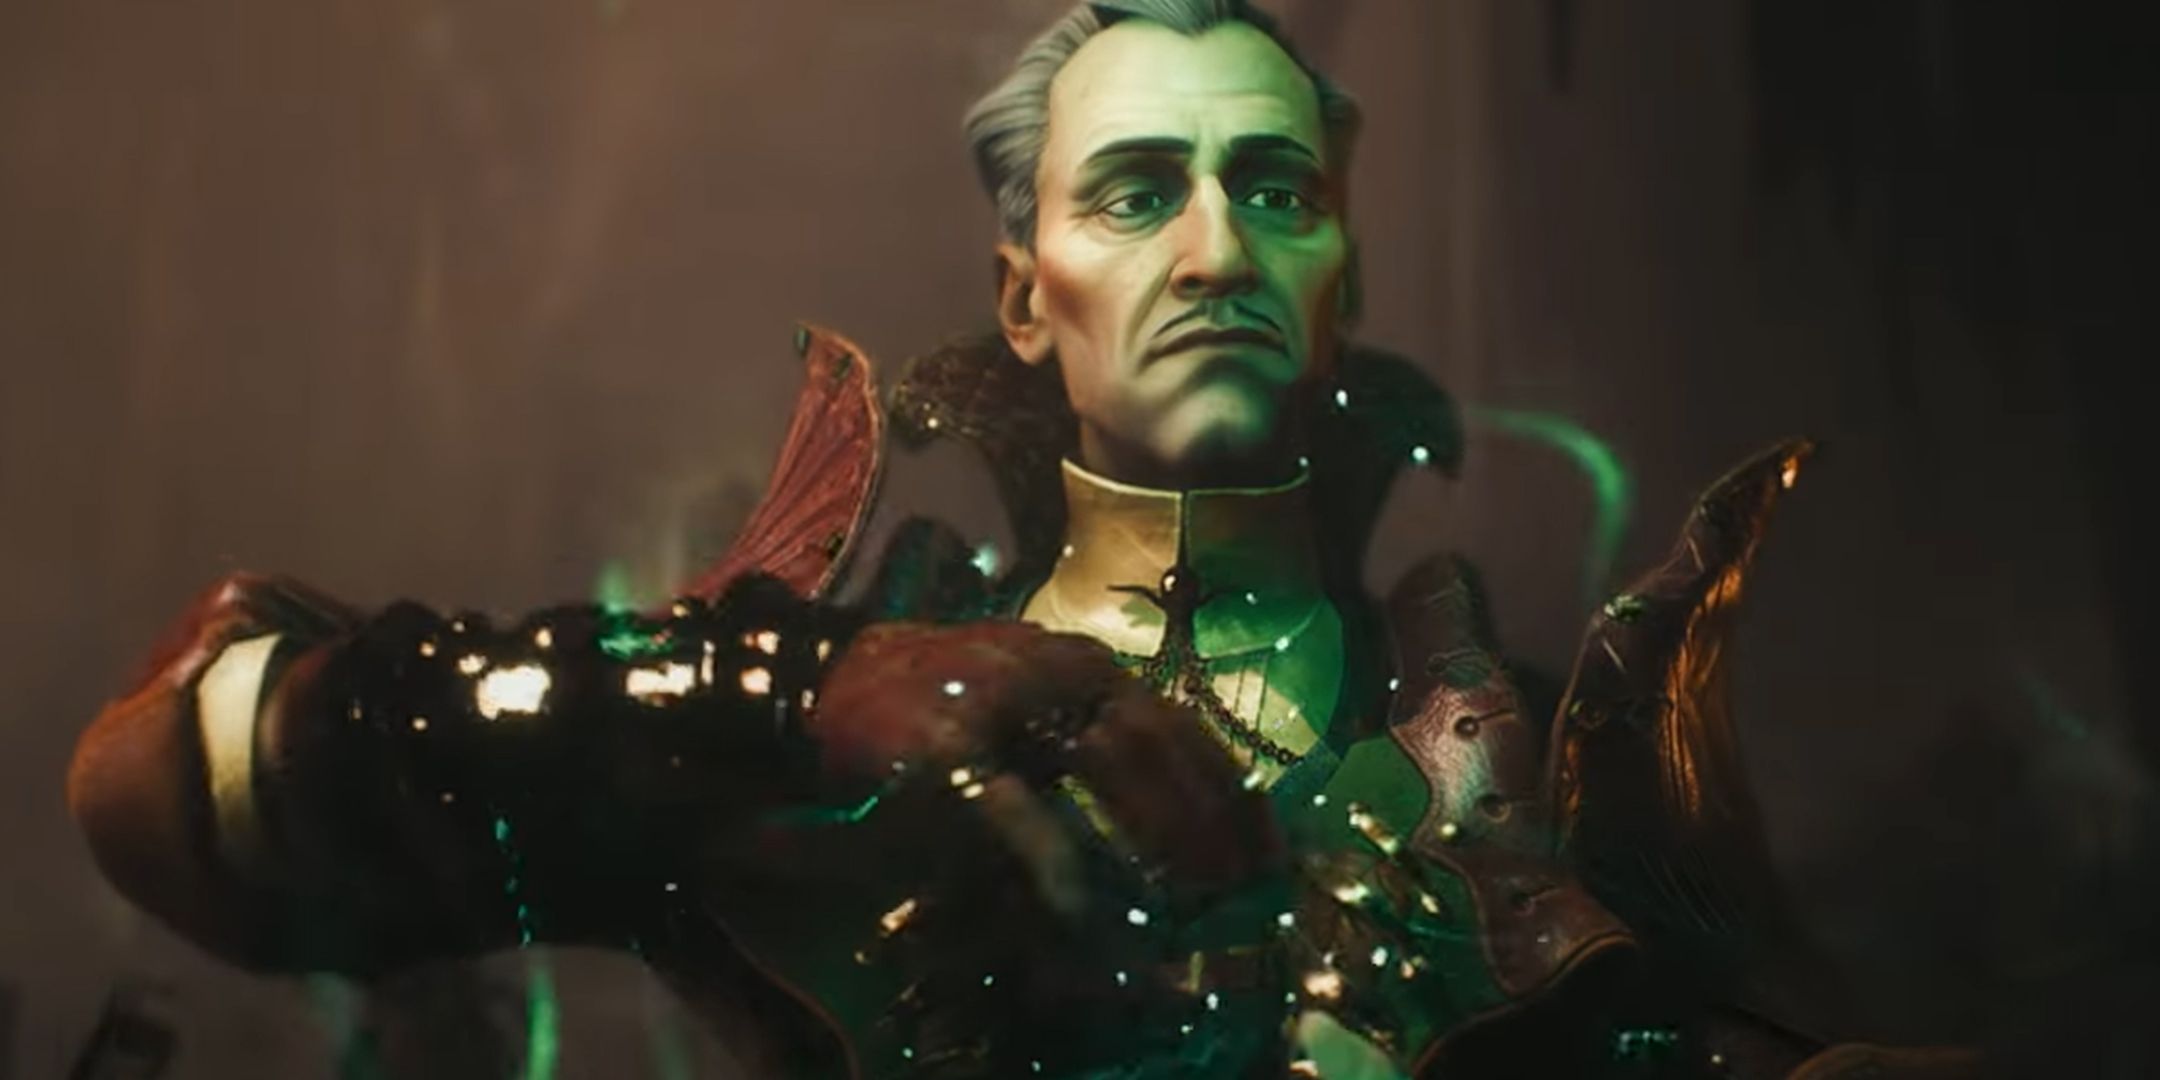 Dragon Age The Veilguard trailer screenshot showing necromancer conjuring green magic